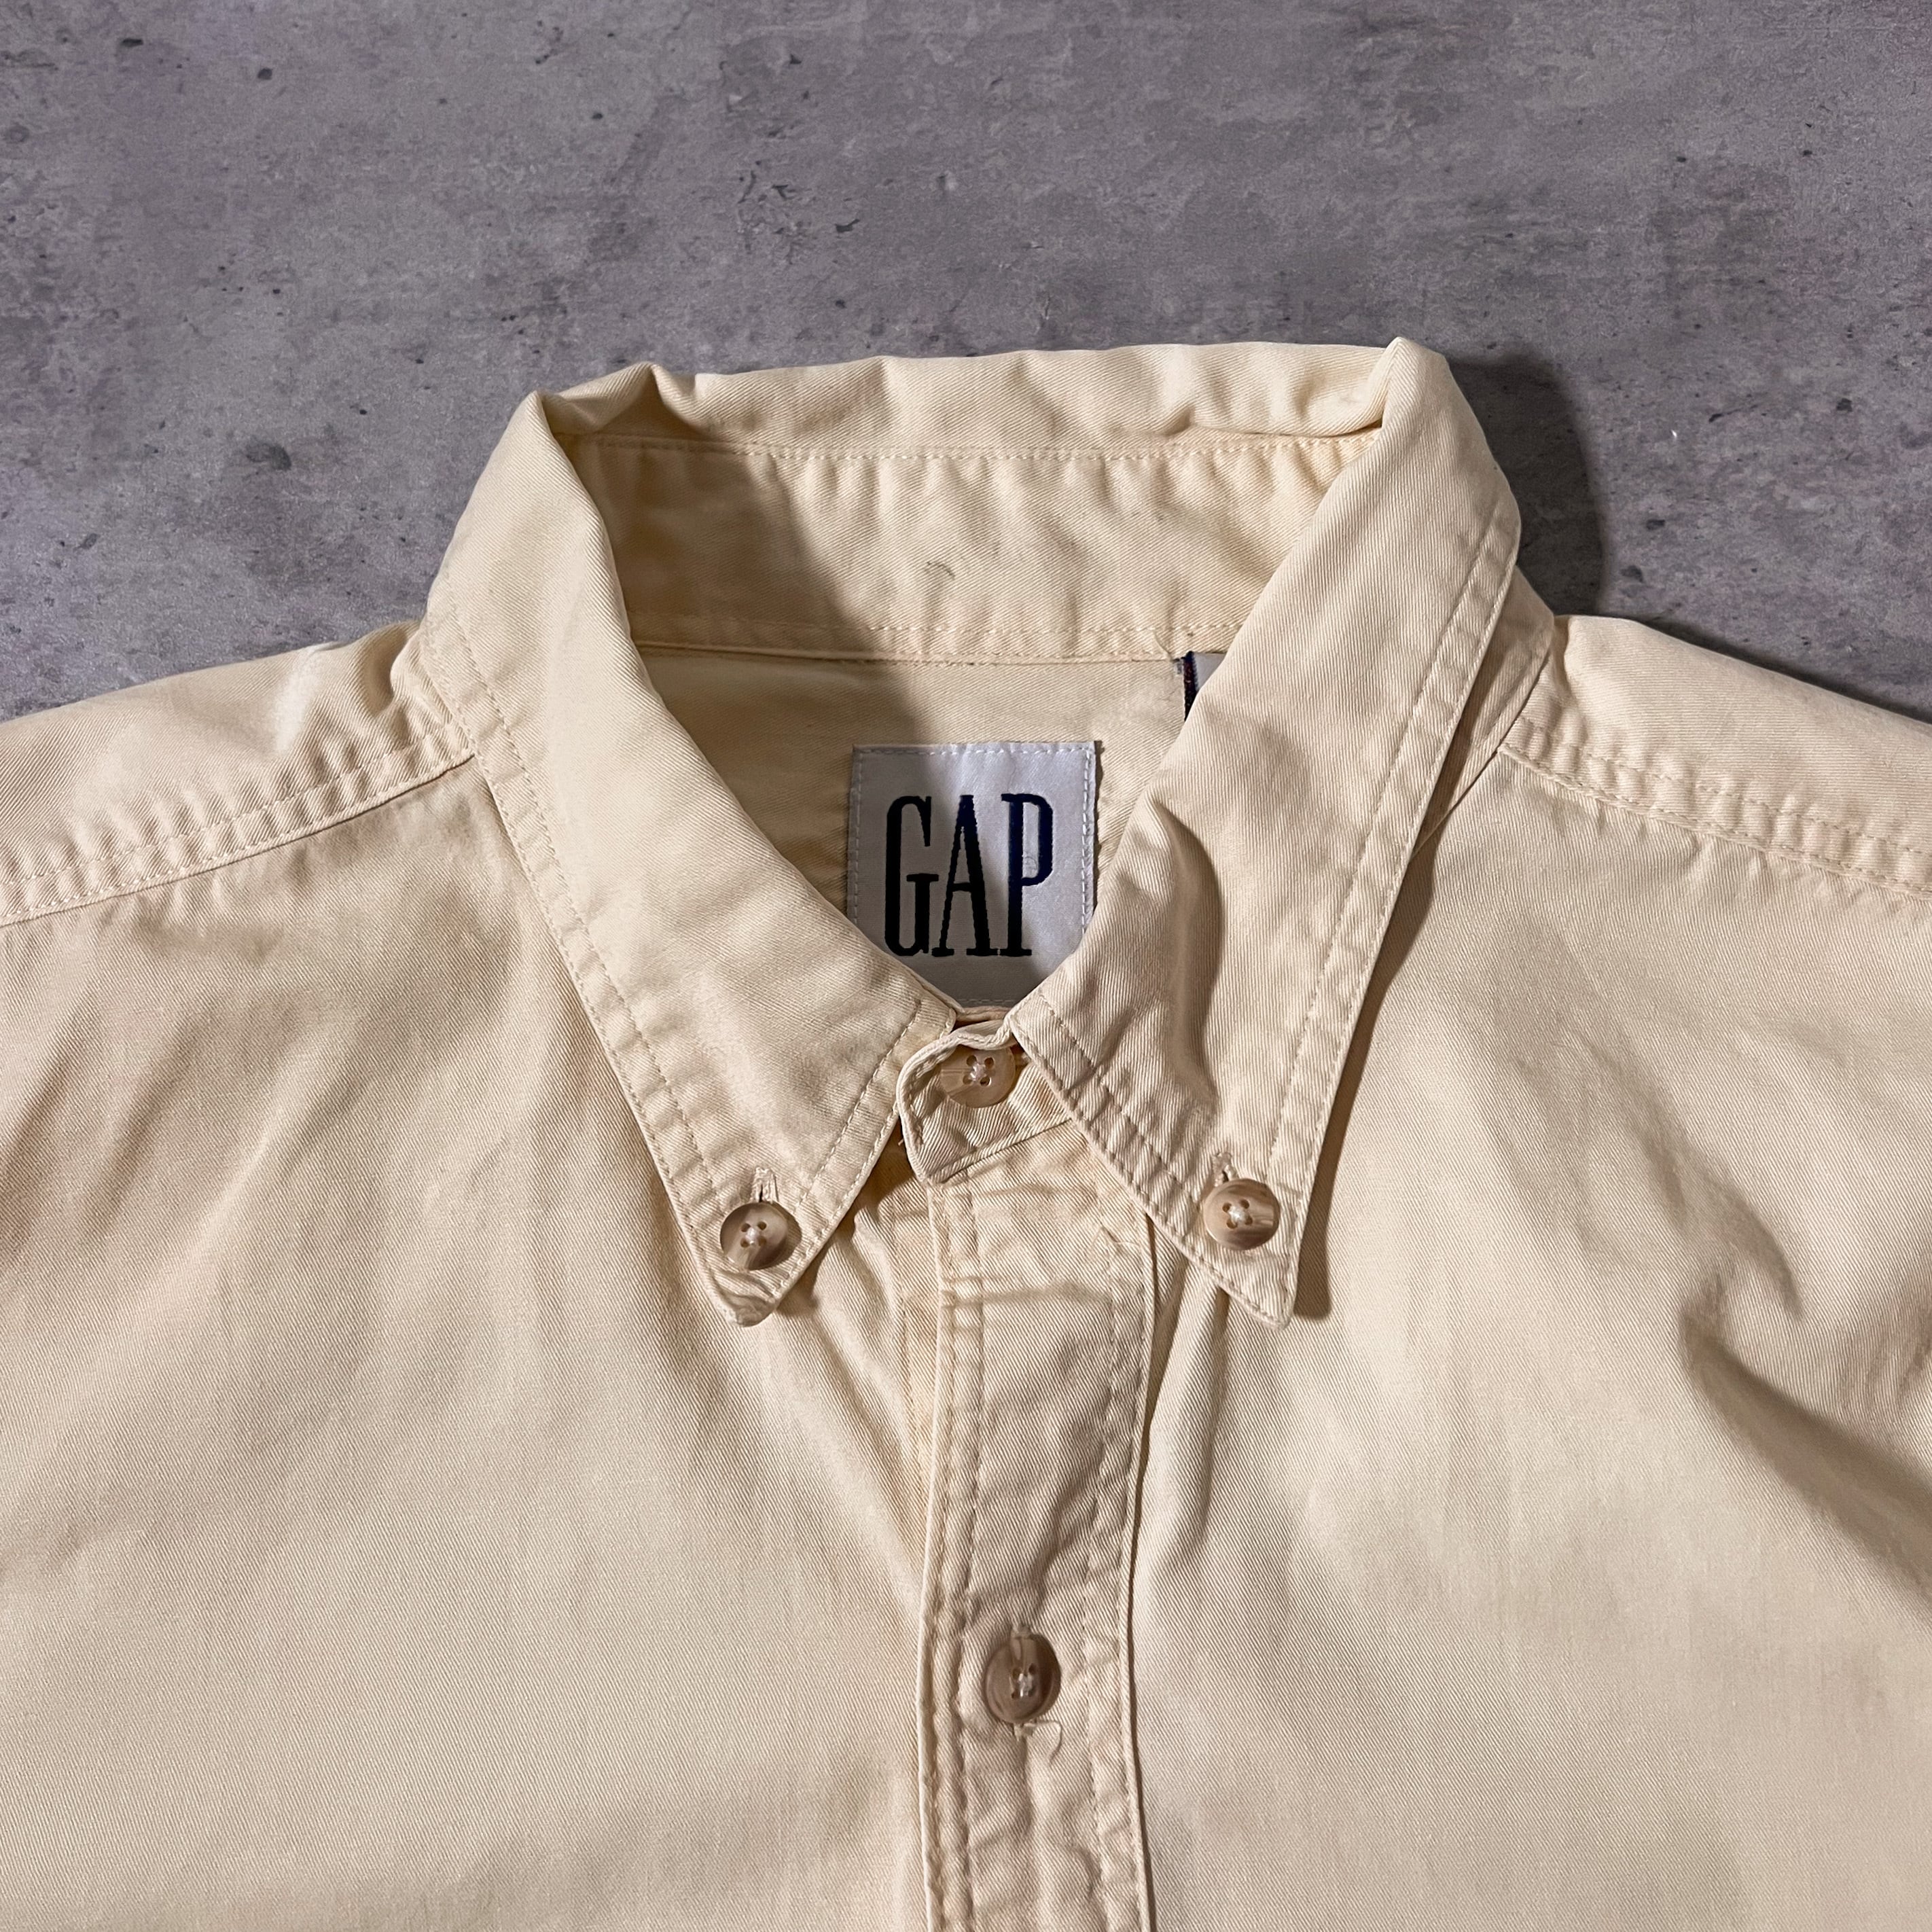 80s-90s “old GAP” light yellow B.D. shirt 80年代 90年代 オールド 